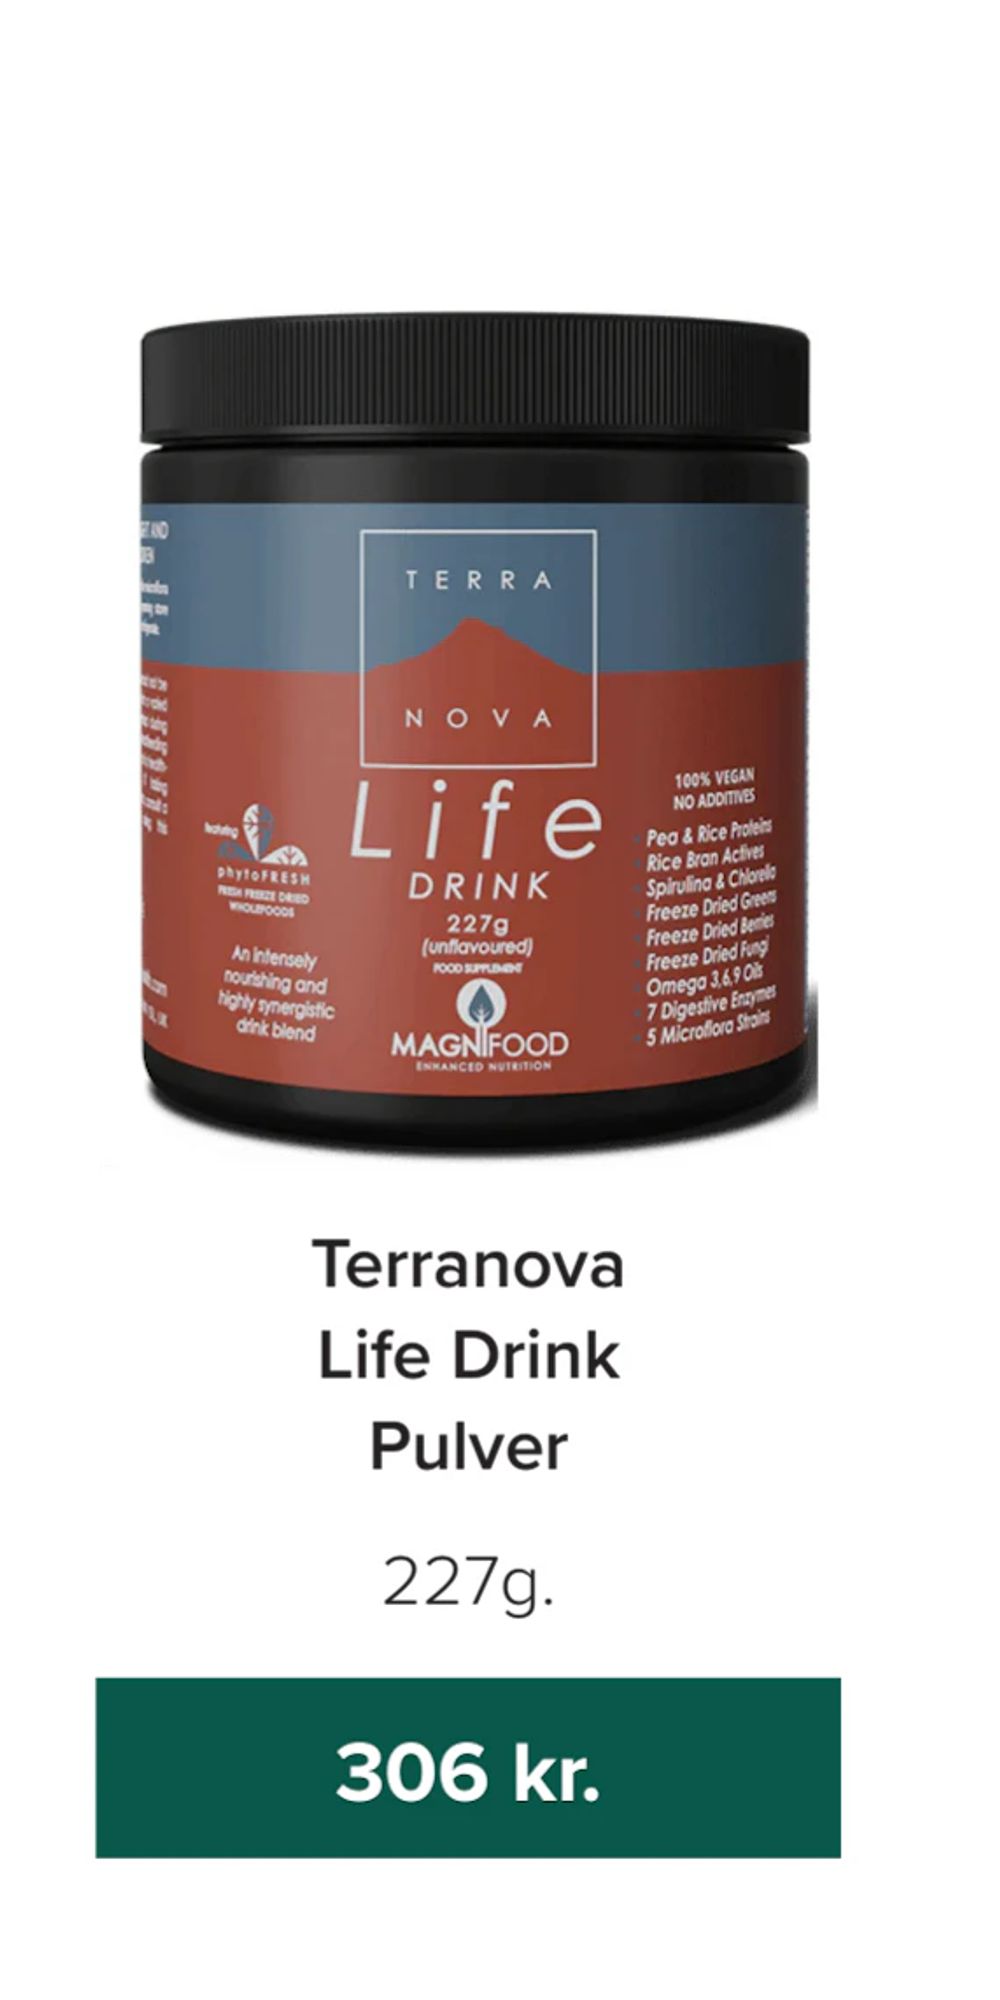 Tilbud på Terranova Life Drink Pulver fra Helsemin til 306 kr.